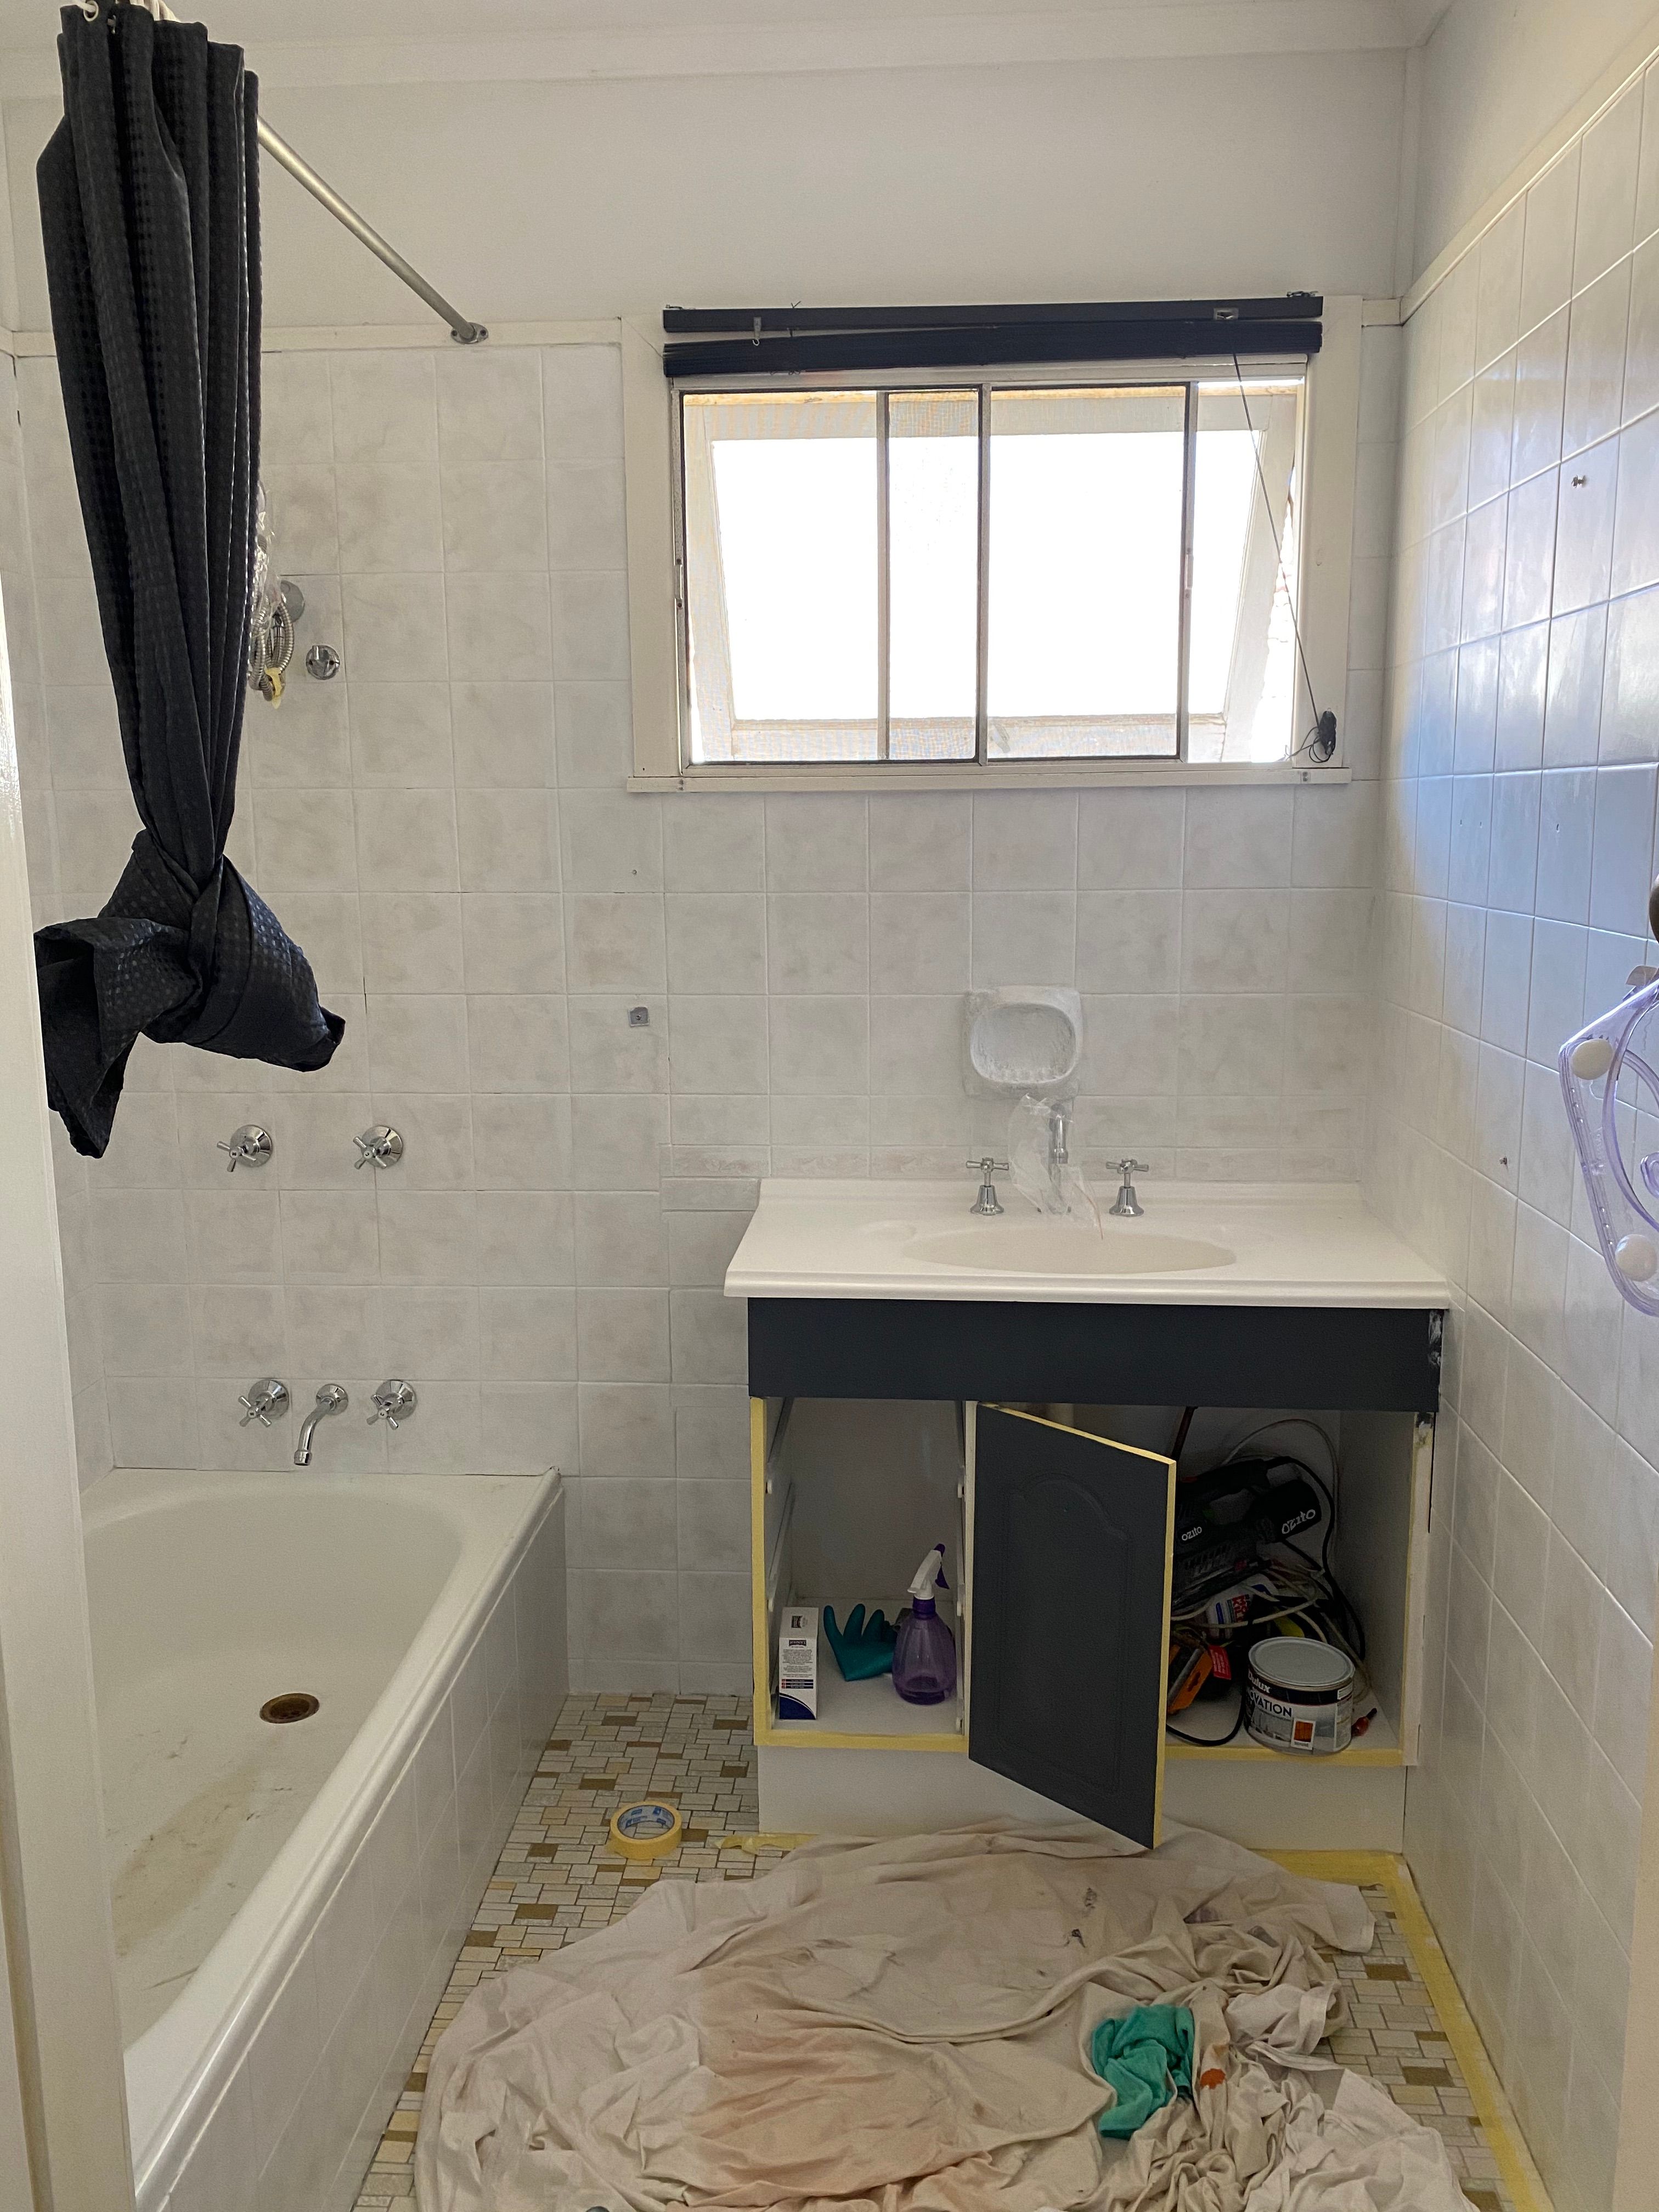 Painted old bathroom and tile | Bunnings Workshop community